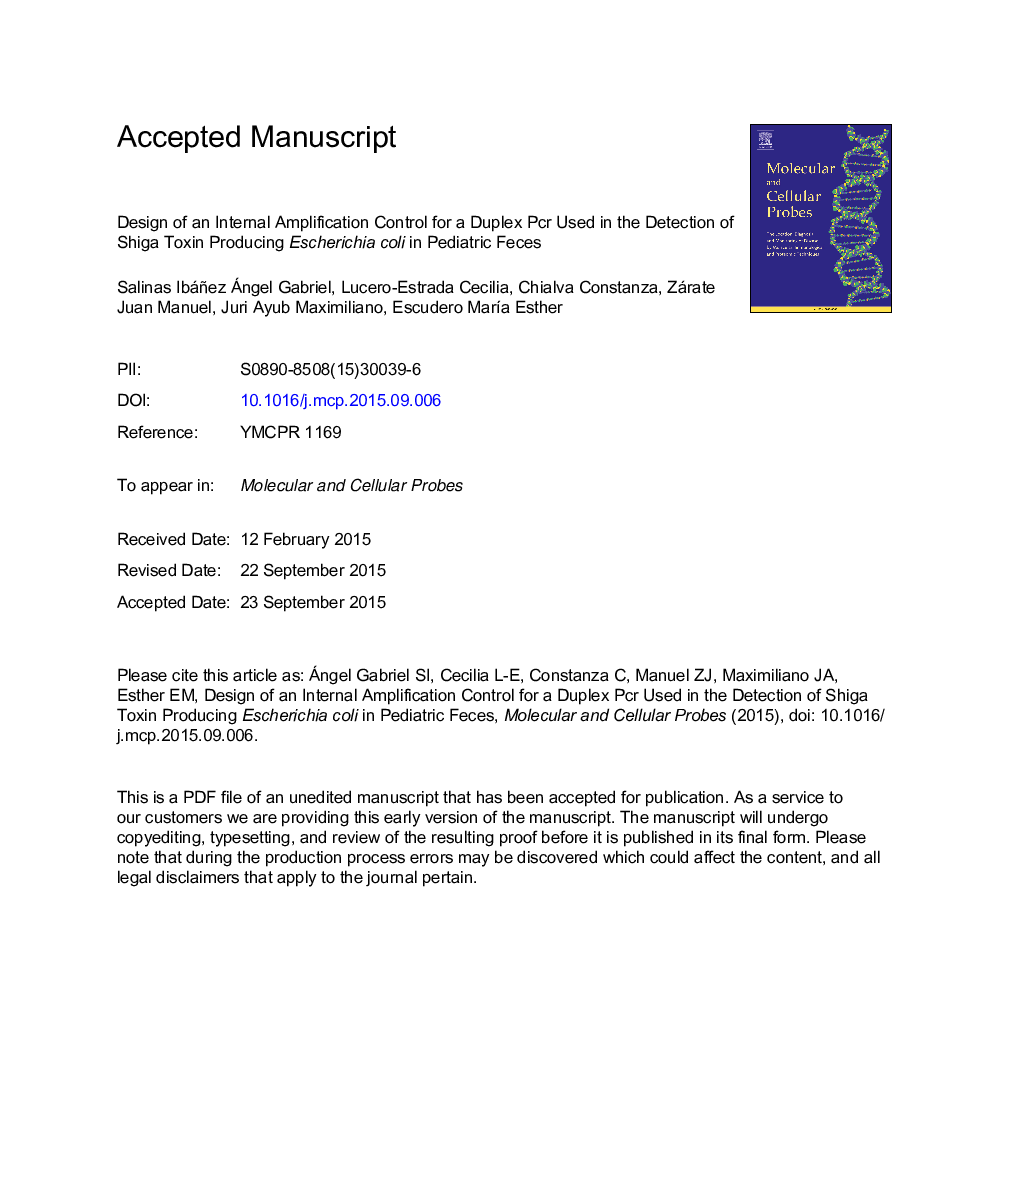 Design of an internal amplification control for a duplex PCR used in the detection of Shiga toxin producing Escherichia coli in pediatric feces